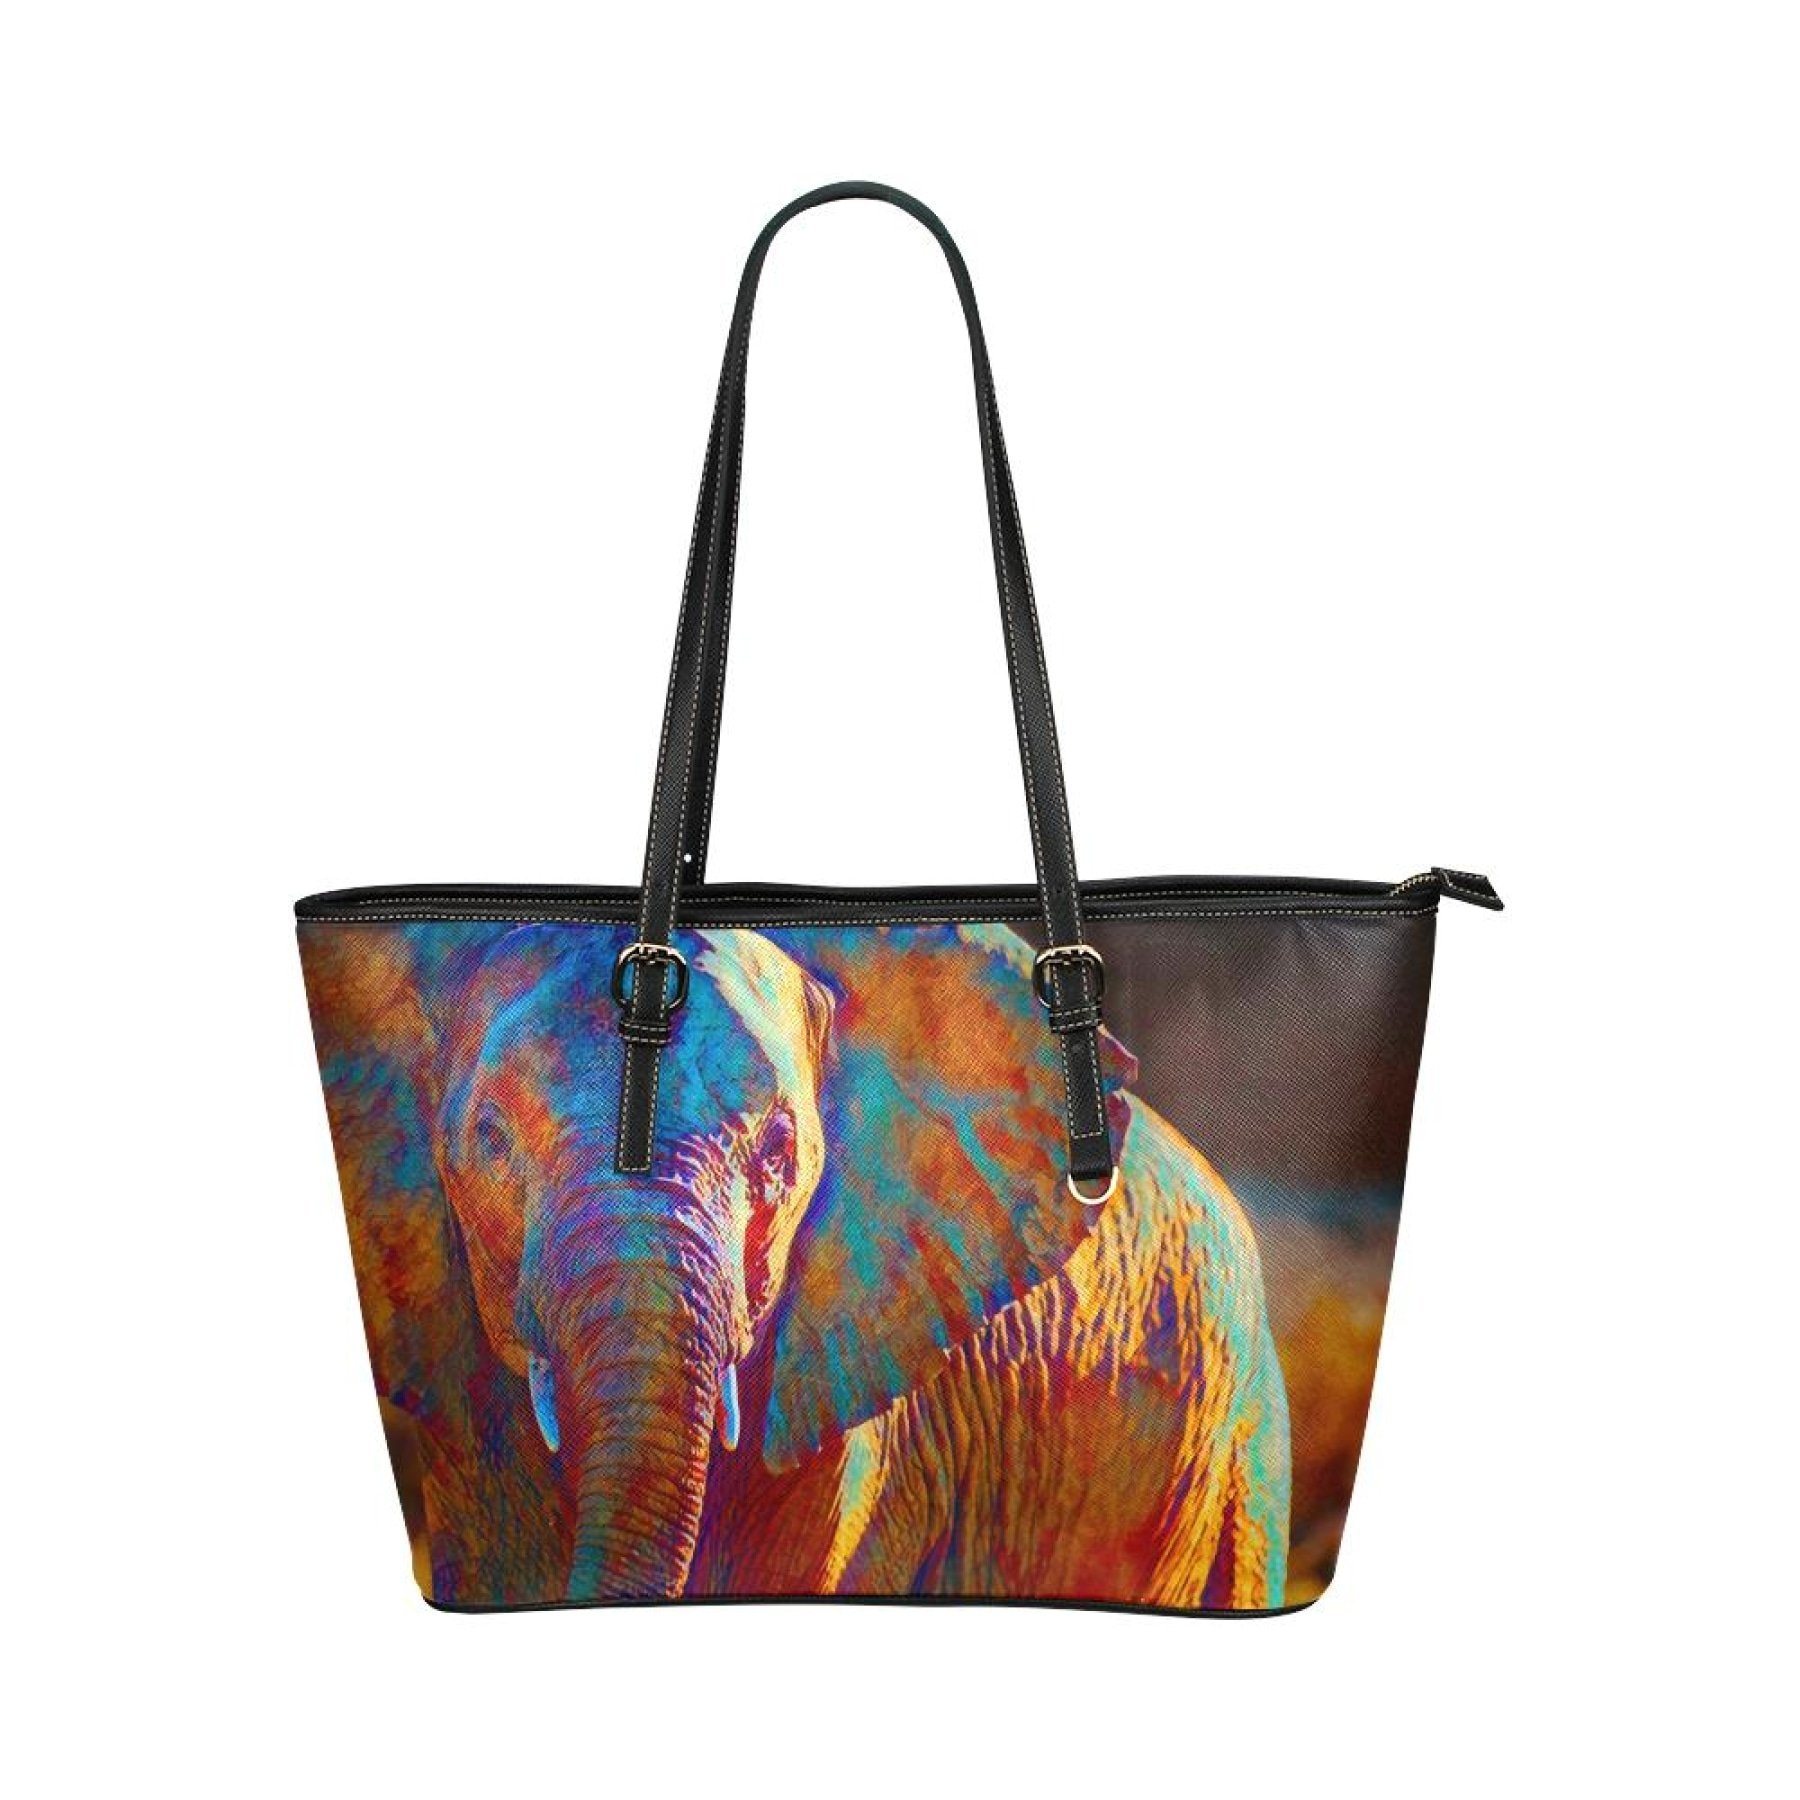 Designer Tote Bags, Colorful Elephant Art Leather Bag 8